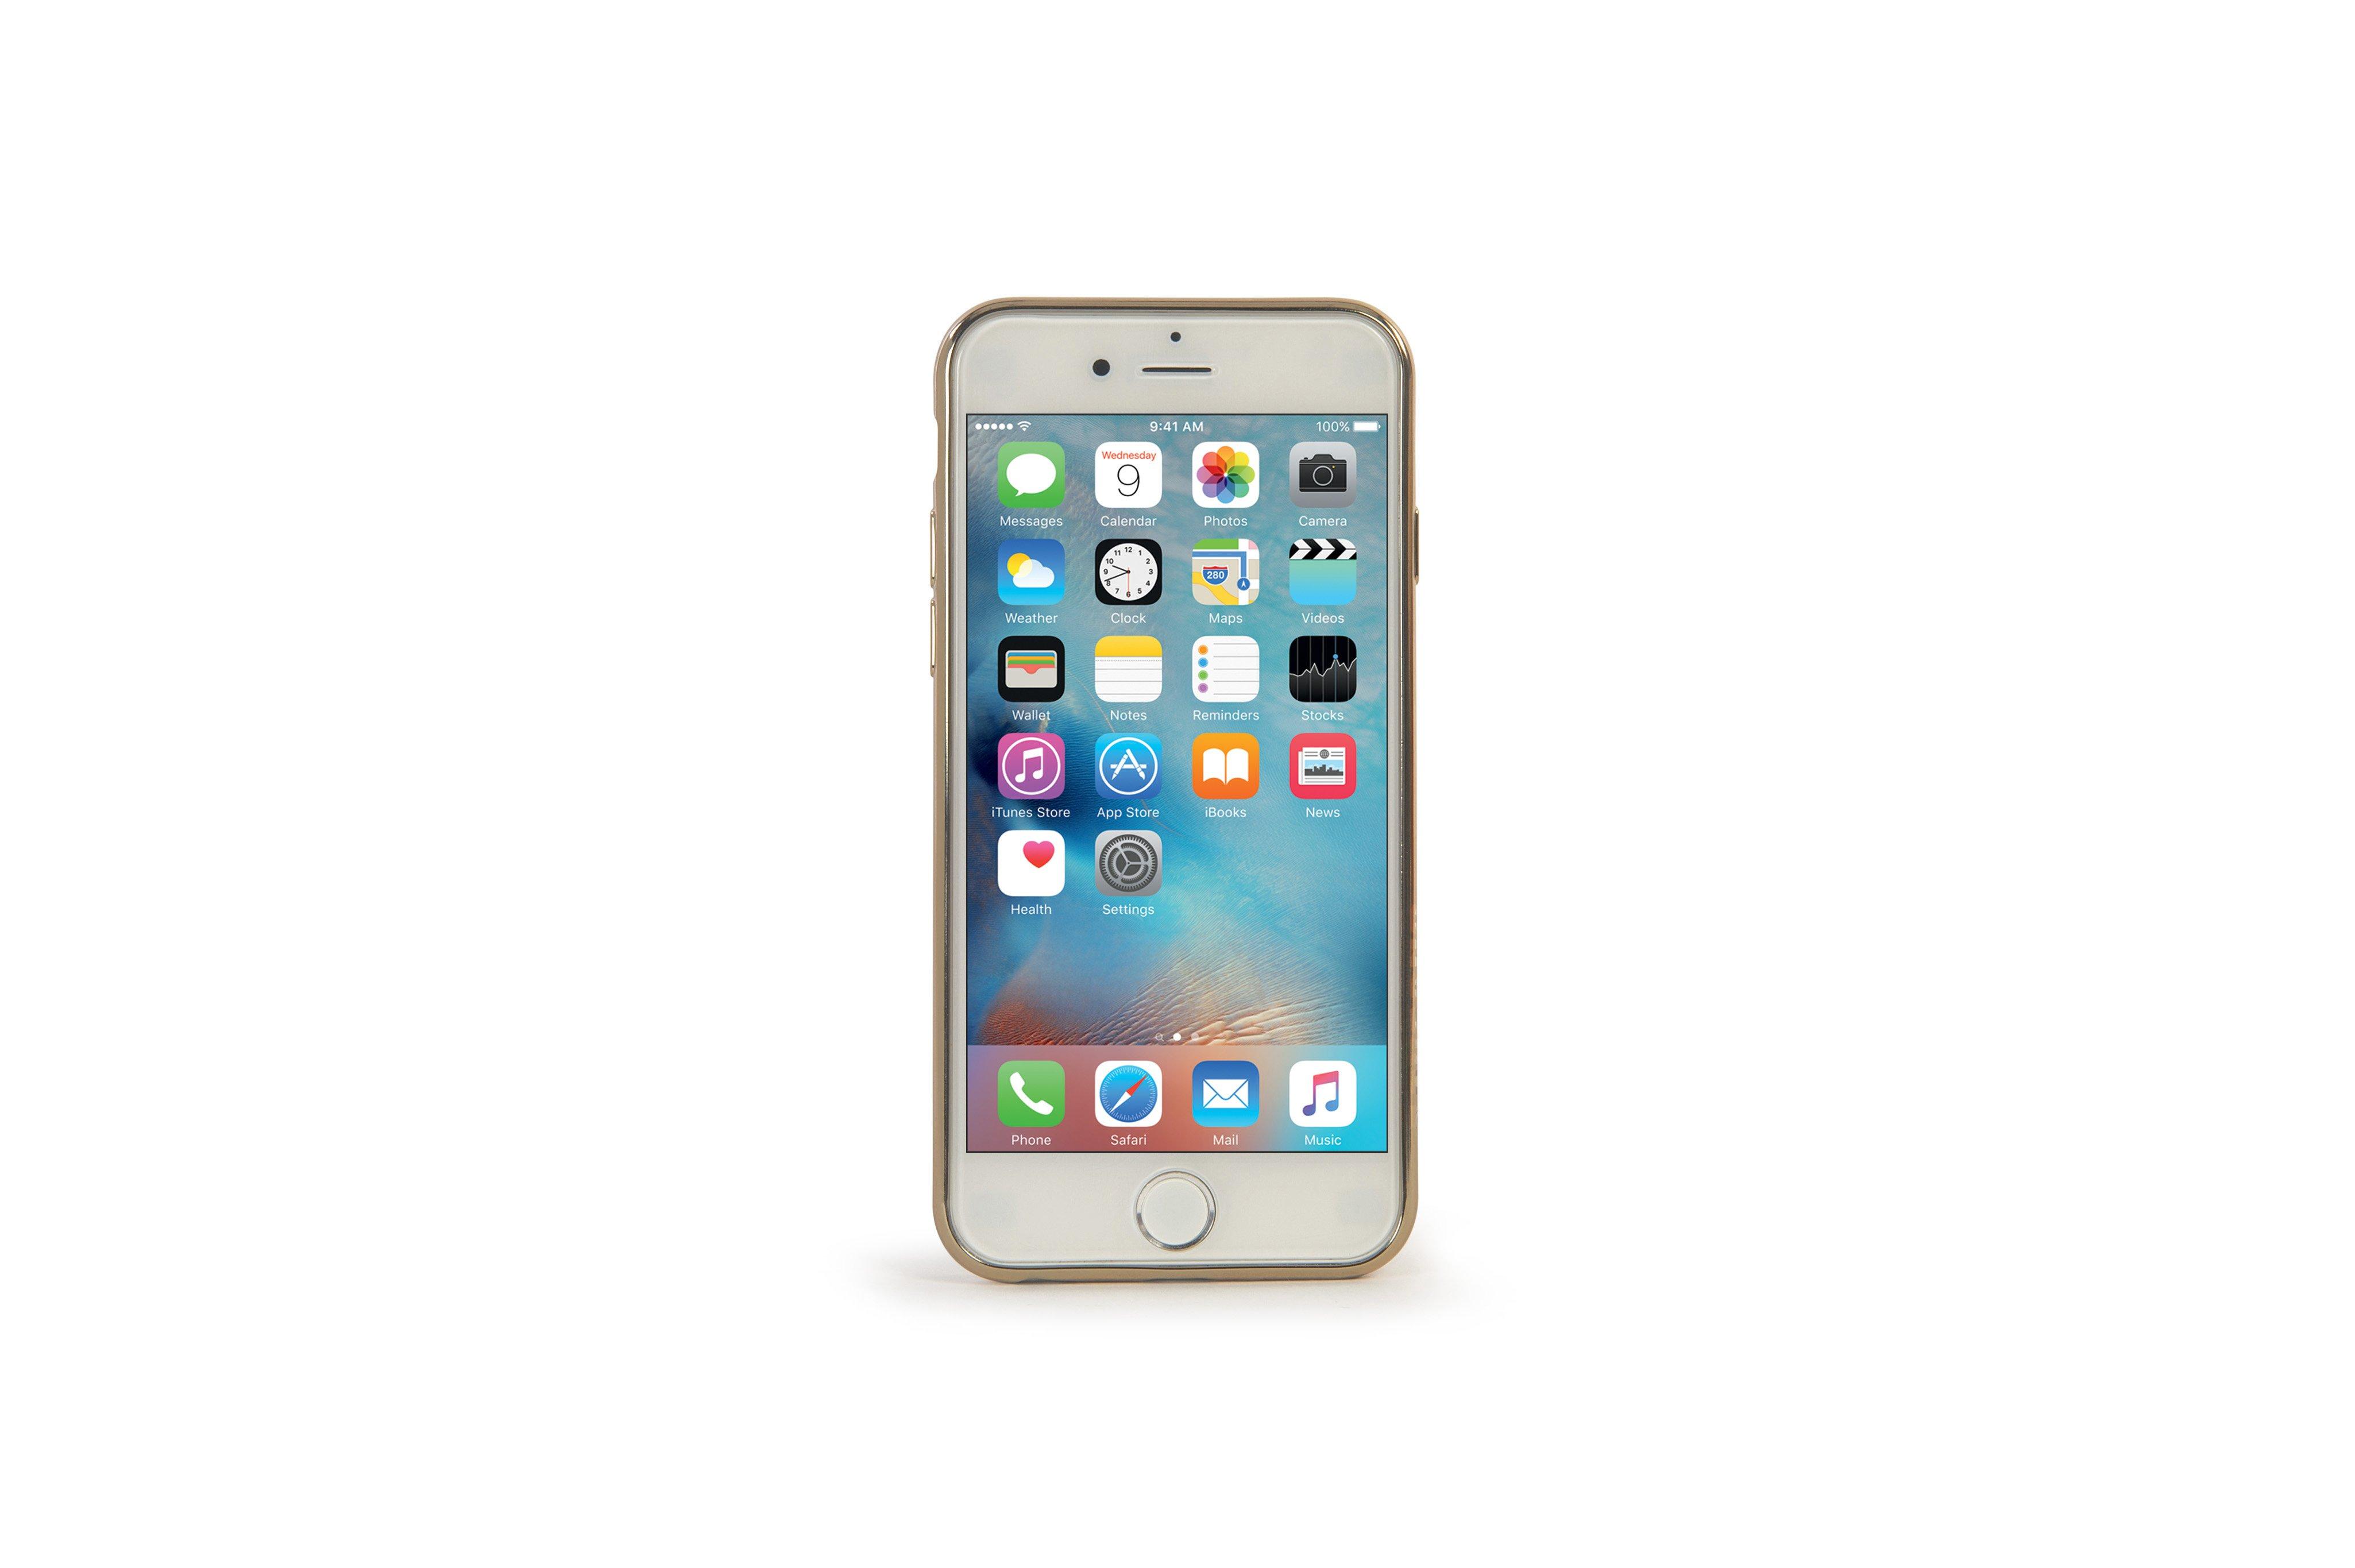 TUCANO Elektro Flex (iPhone 6/6s) Hardcase für Smartphones 